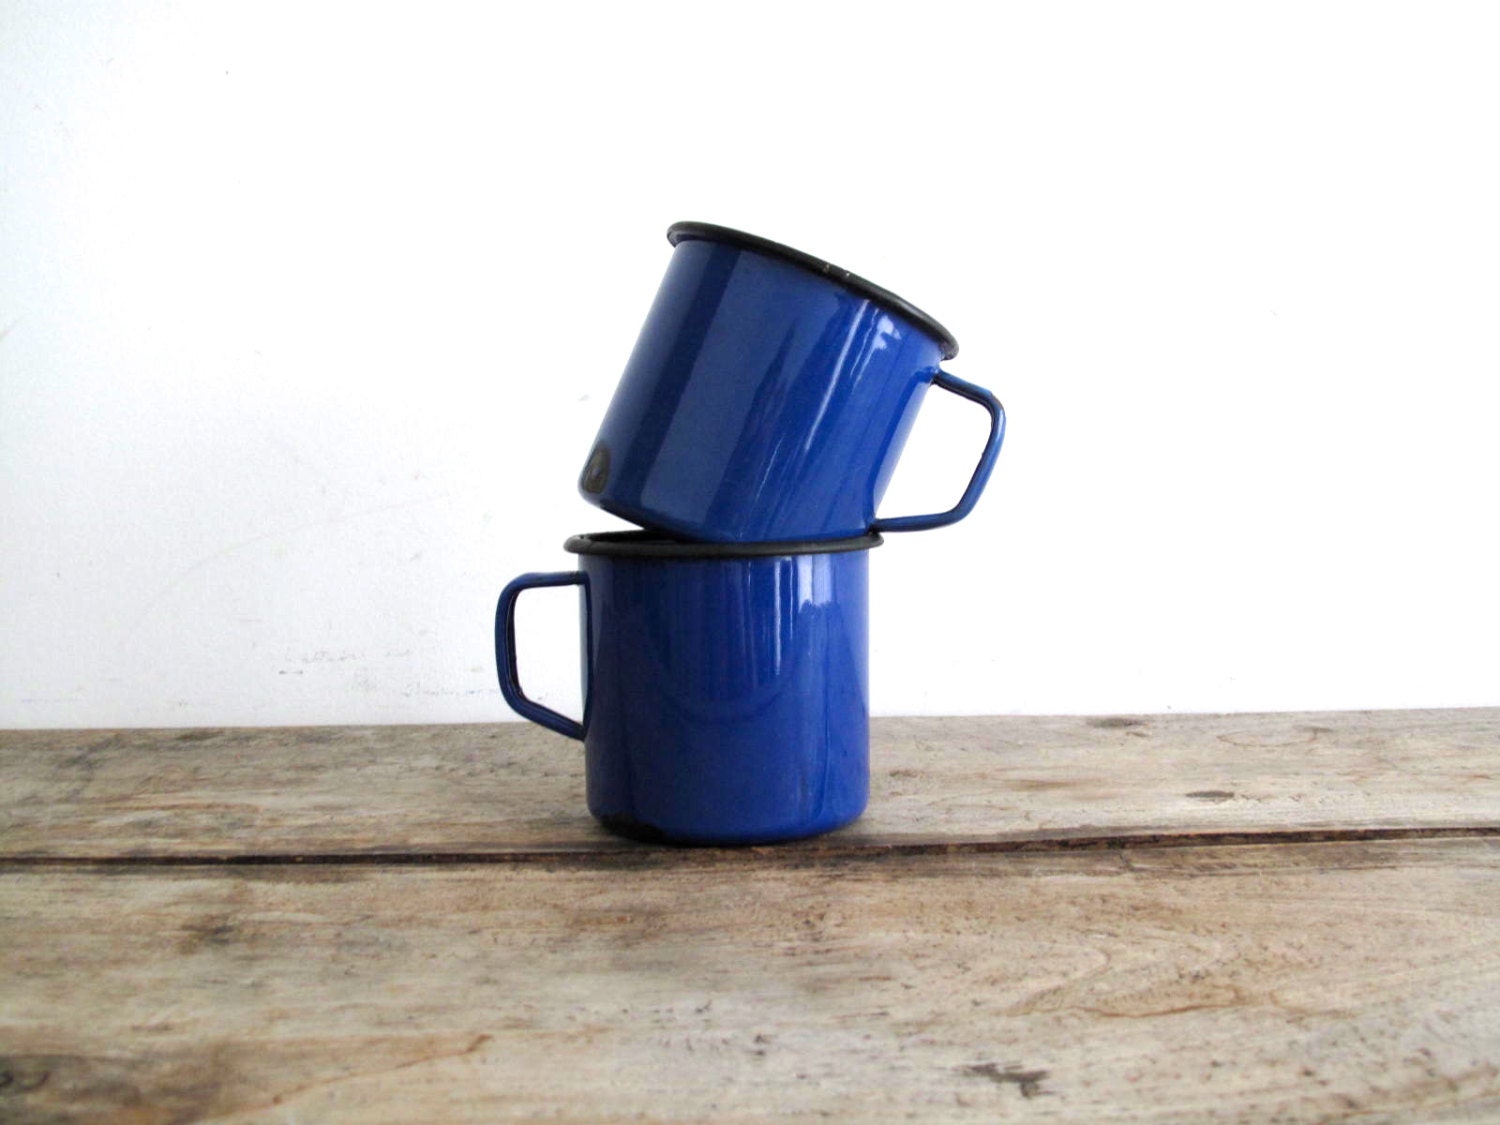 Vintage Blue Enamel Cup - Blue Metal Cups /  Enamel Mugs - Camping Decor - Rustic Primitive Industrial Decor - SnapshotVintage